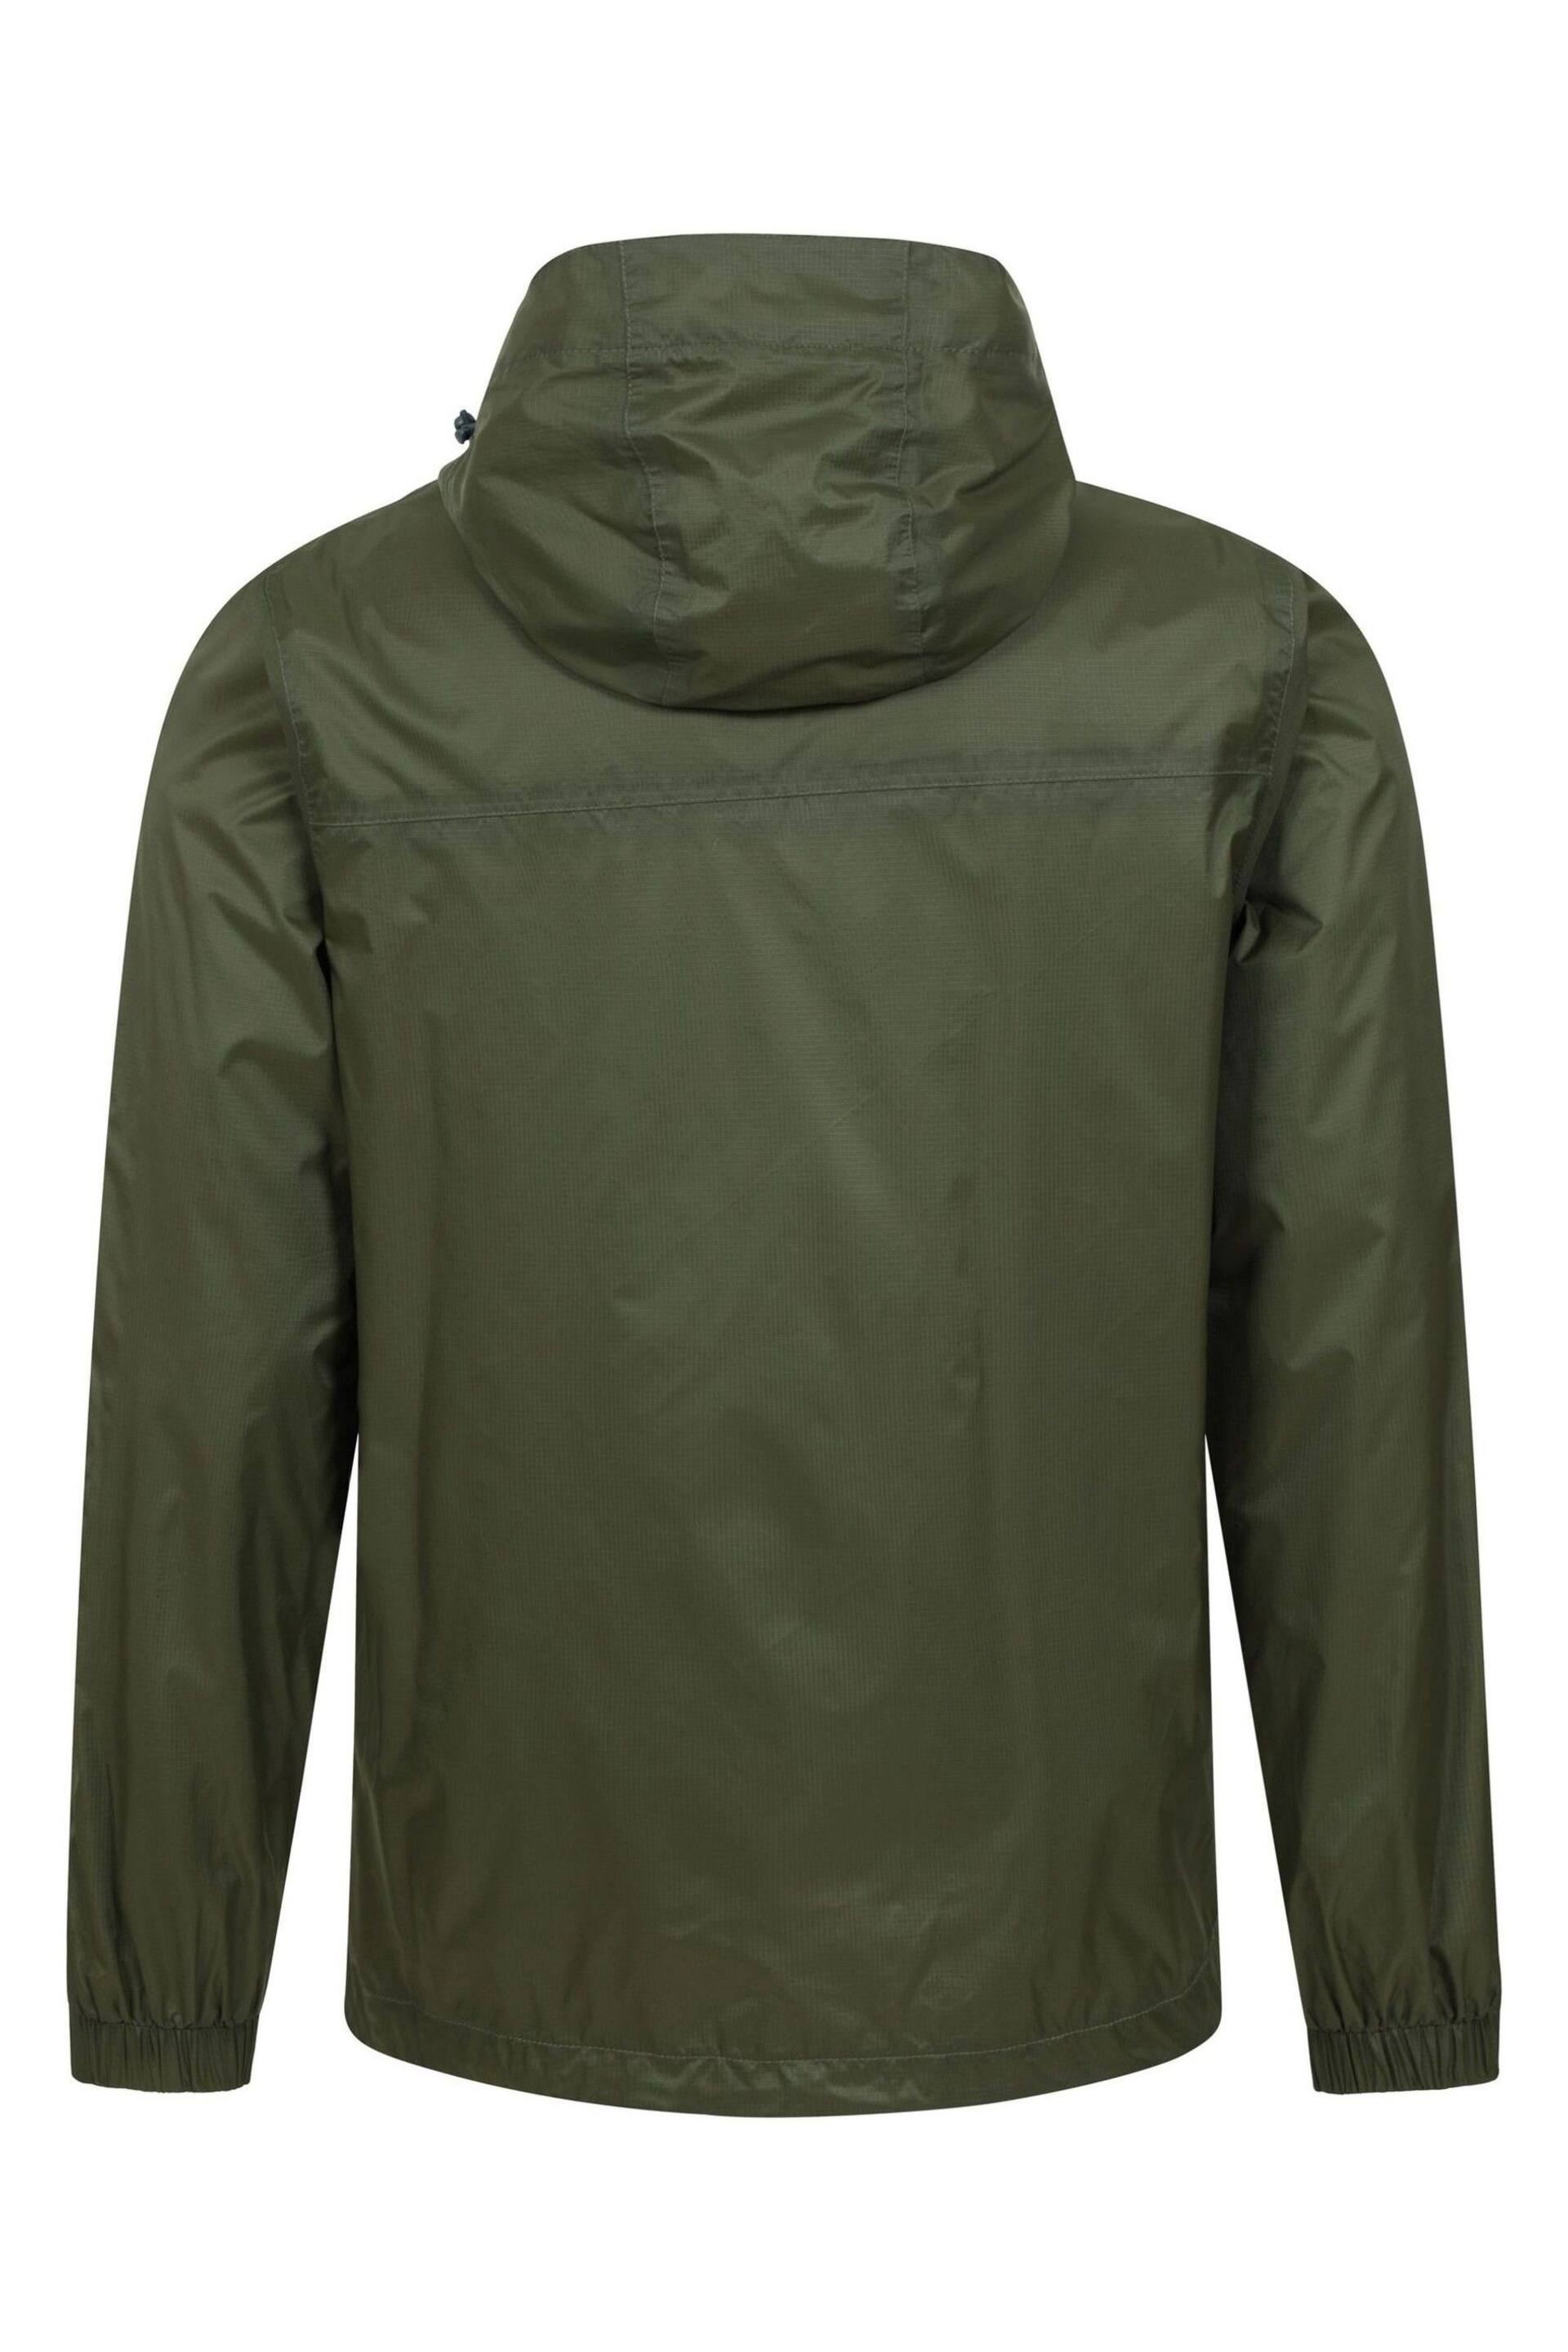 Mountain Warehouse Green Mens Torrent Waterproof Jacket - Image 3 of 5